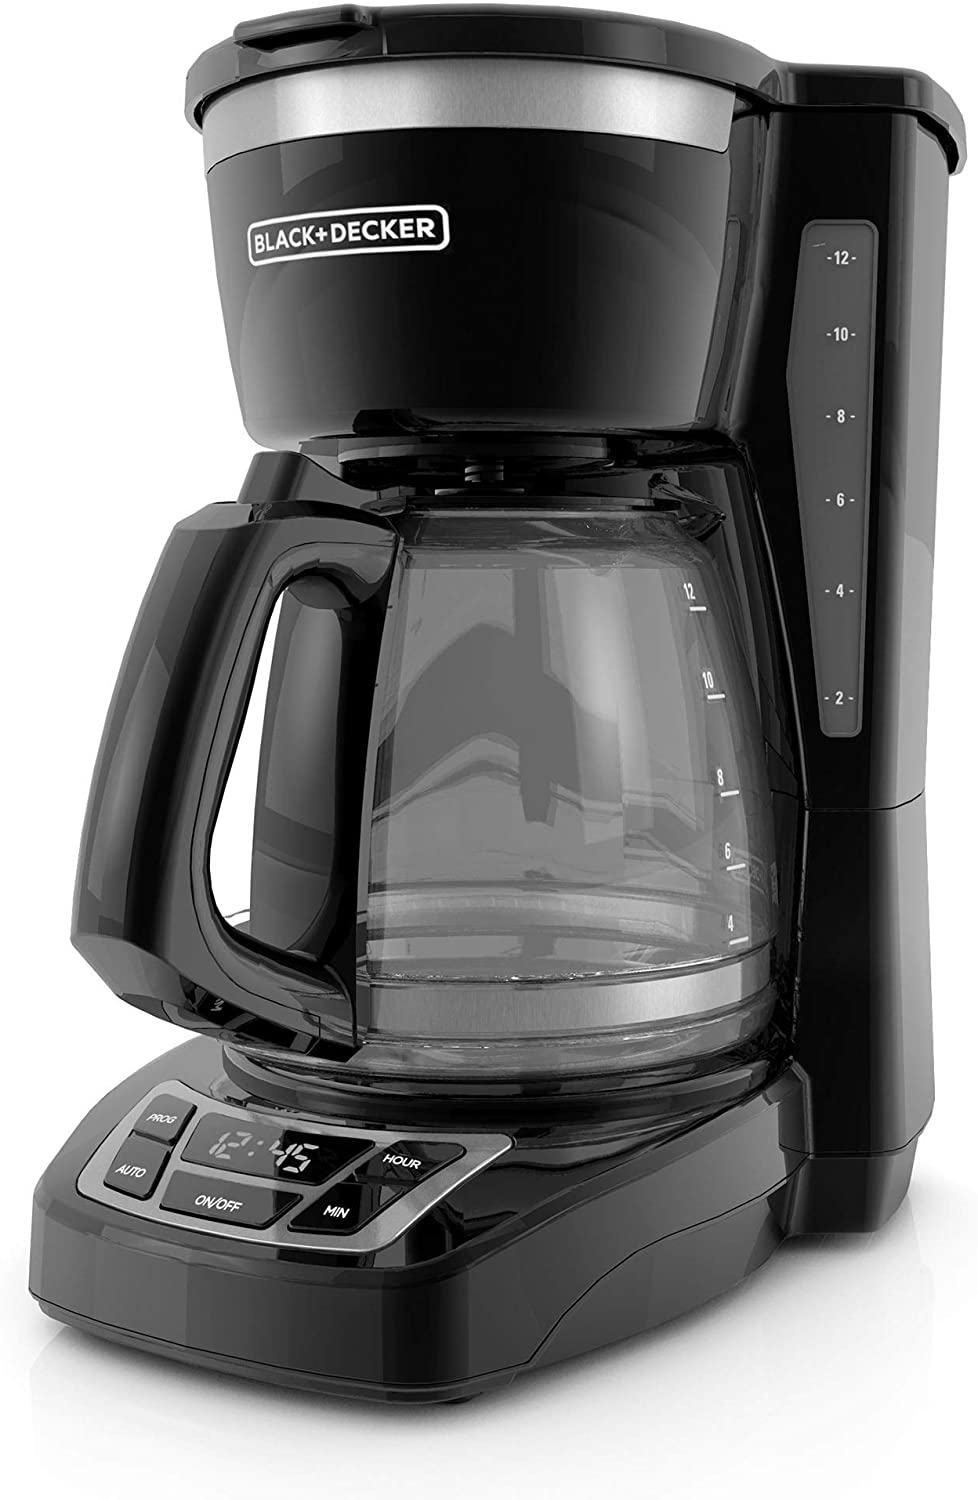 4. BLACK+DECKER 12-Cup Programmable Coffeemaker, Black, CM1160B